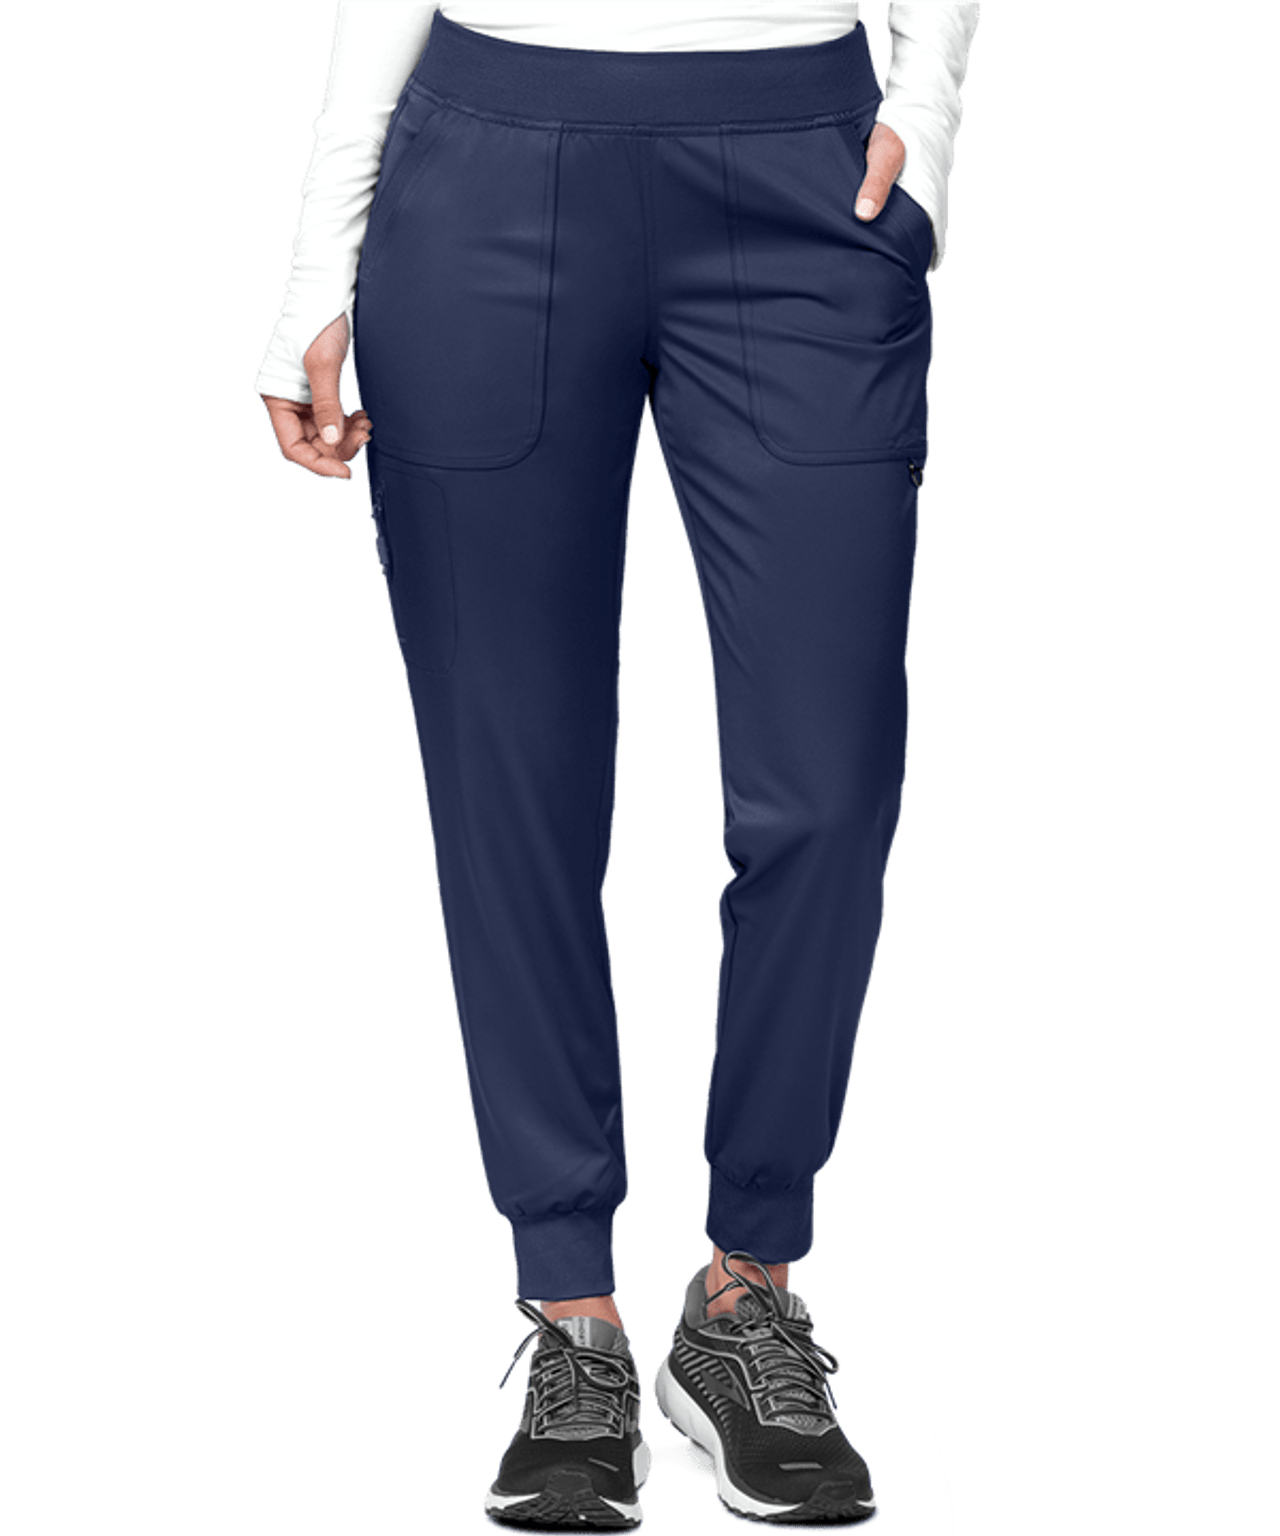 Ava Therese Women's Jogger Scrub Pant style 3017